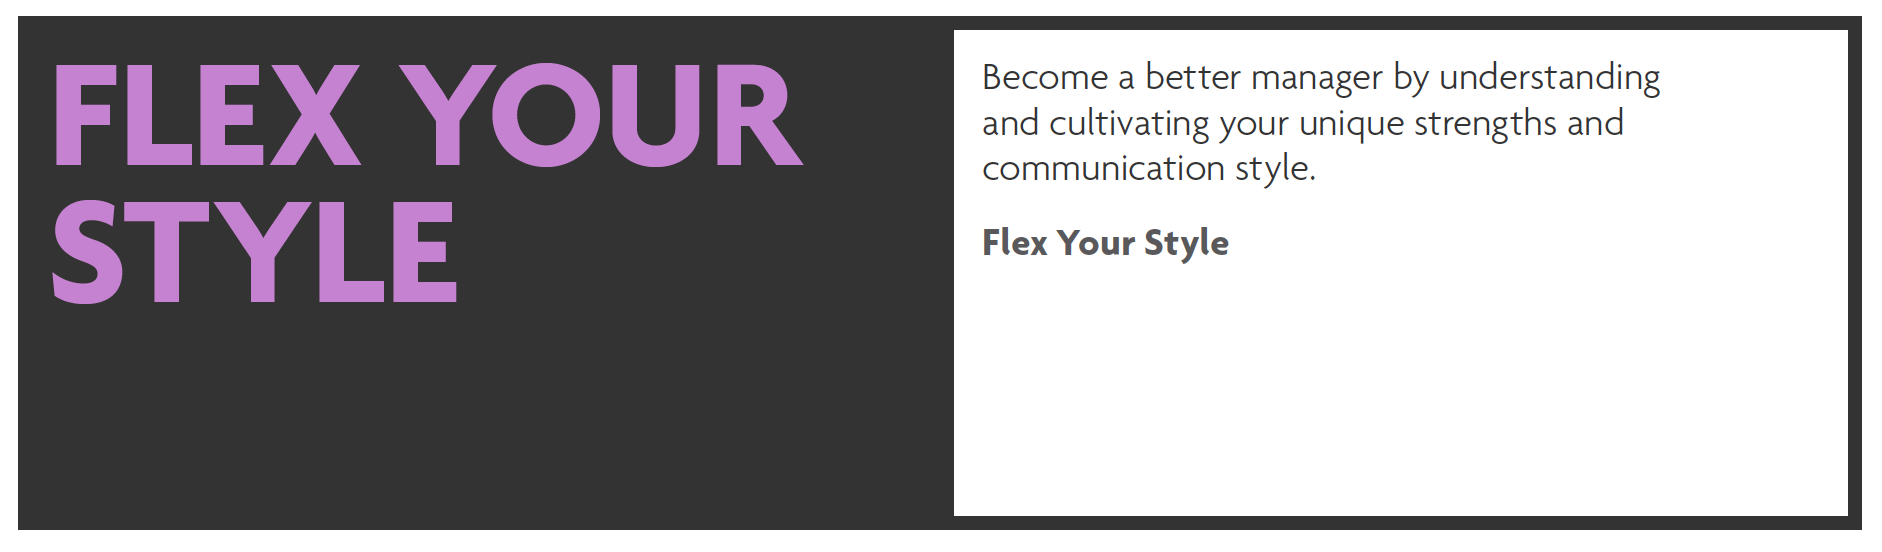 Single Session: Flex Your Style